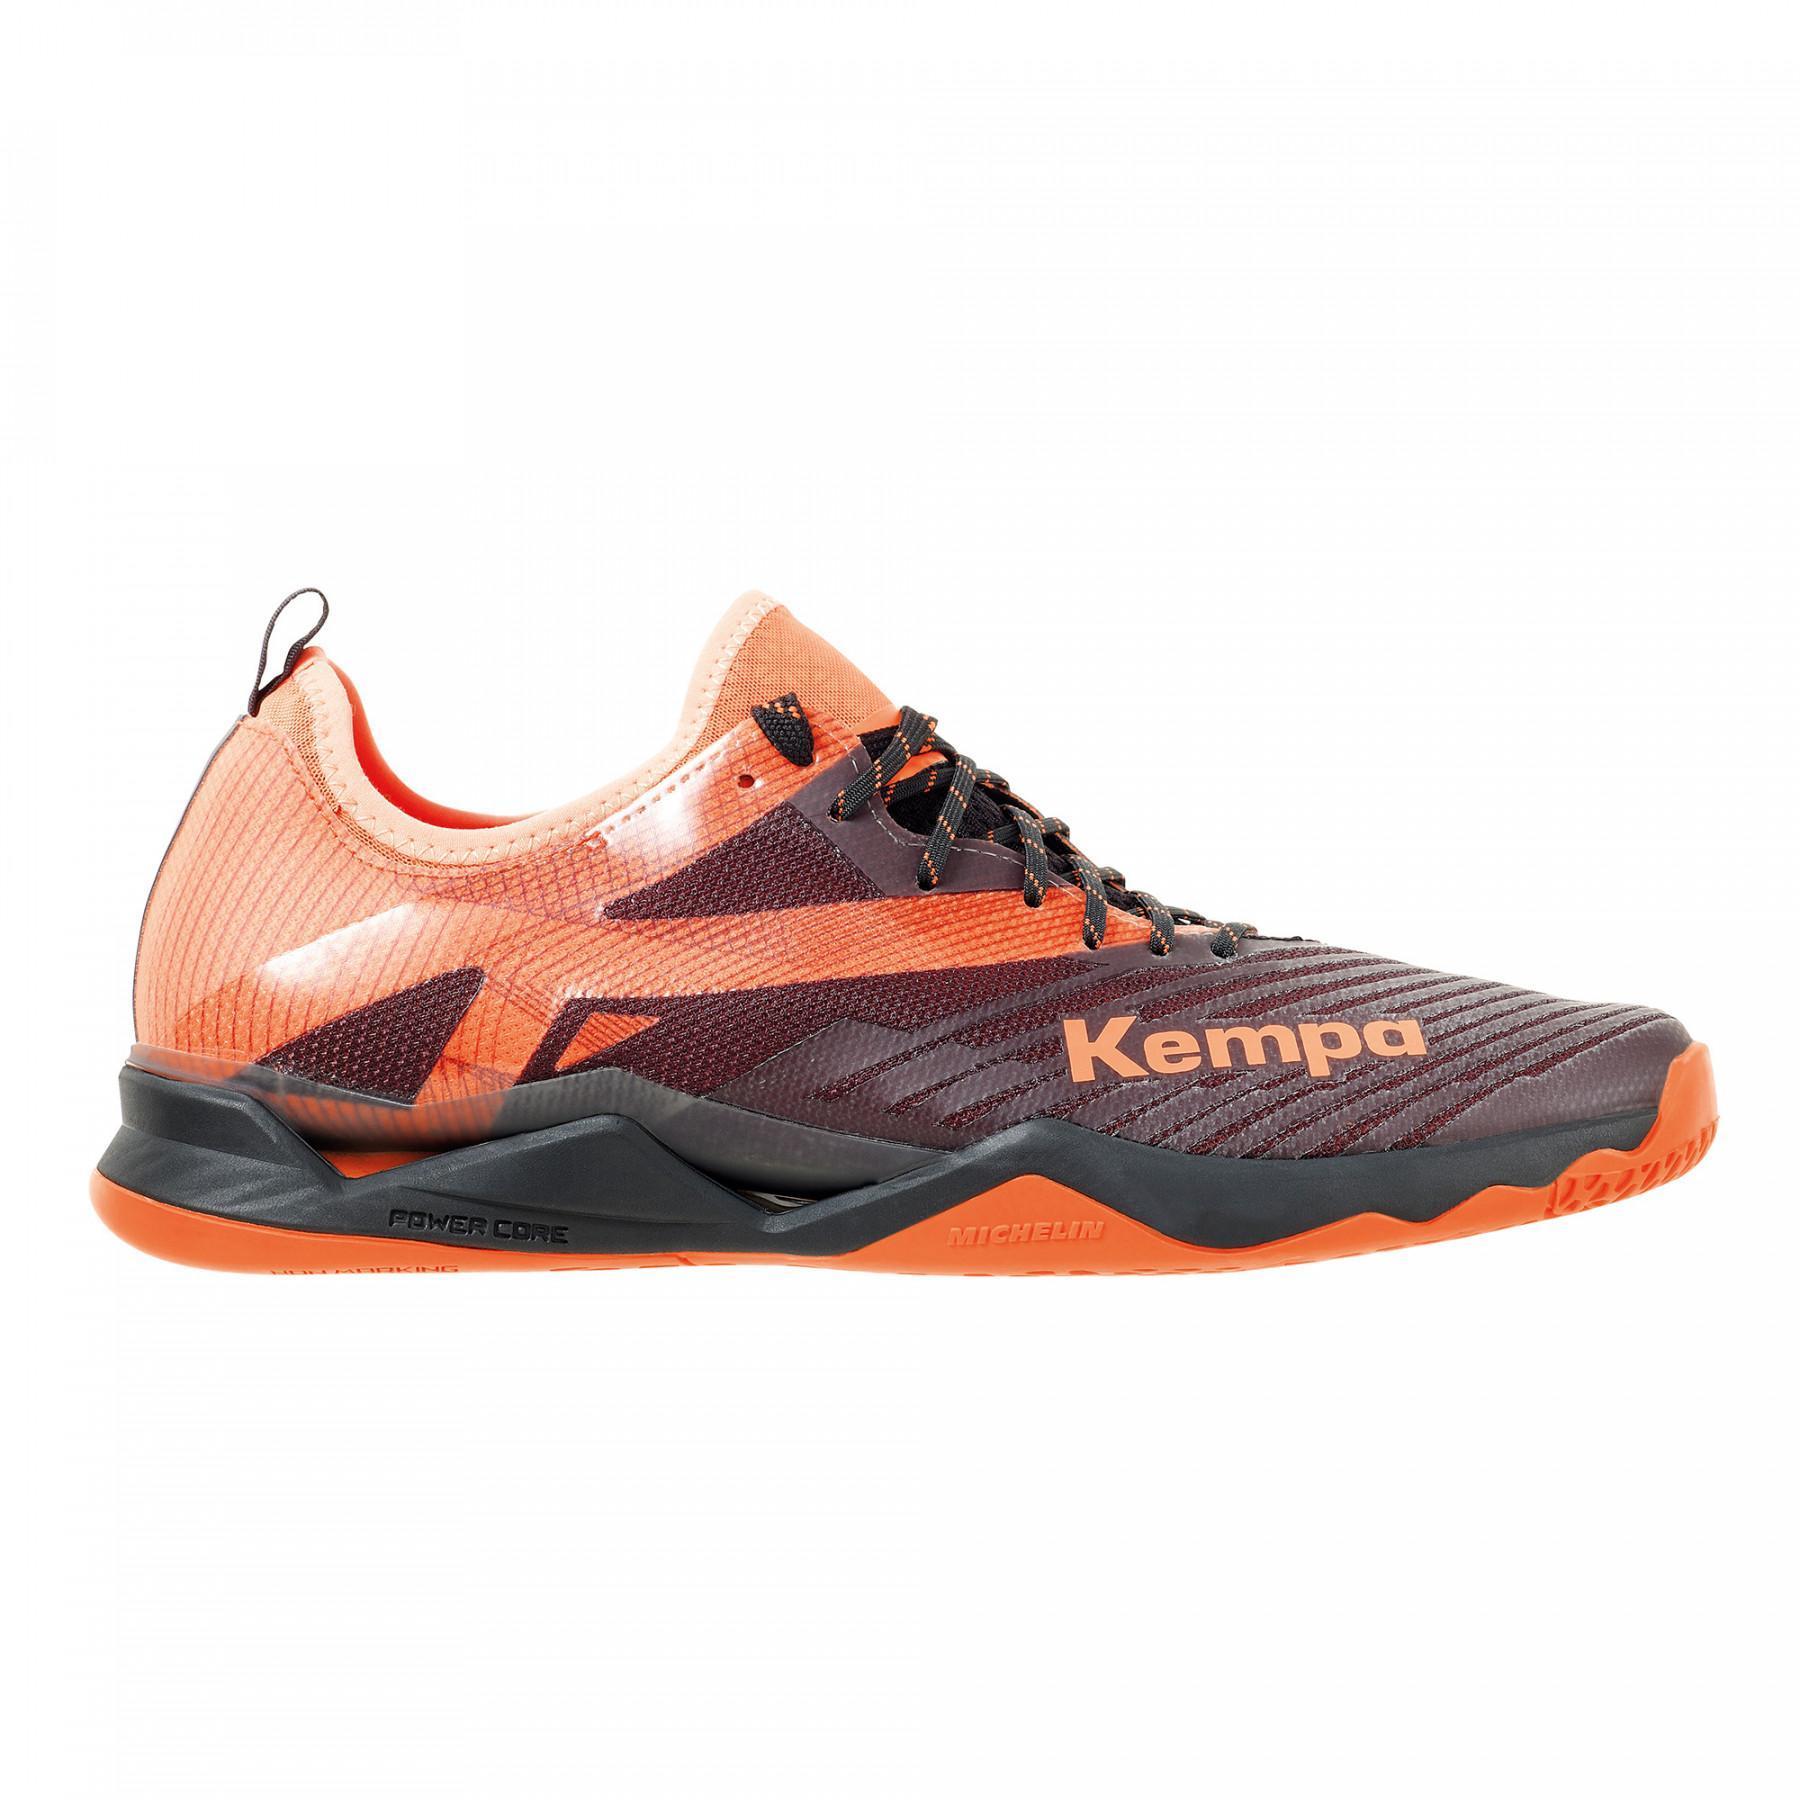 Zapatos Kempa Wing Lite 2.0